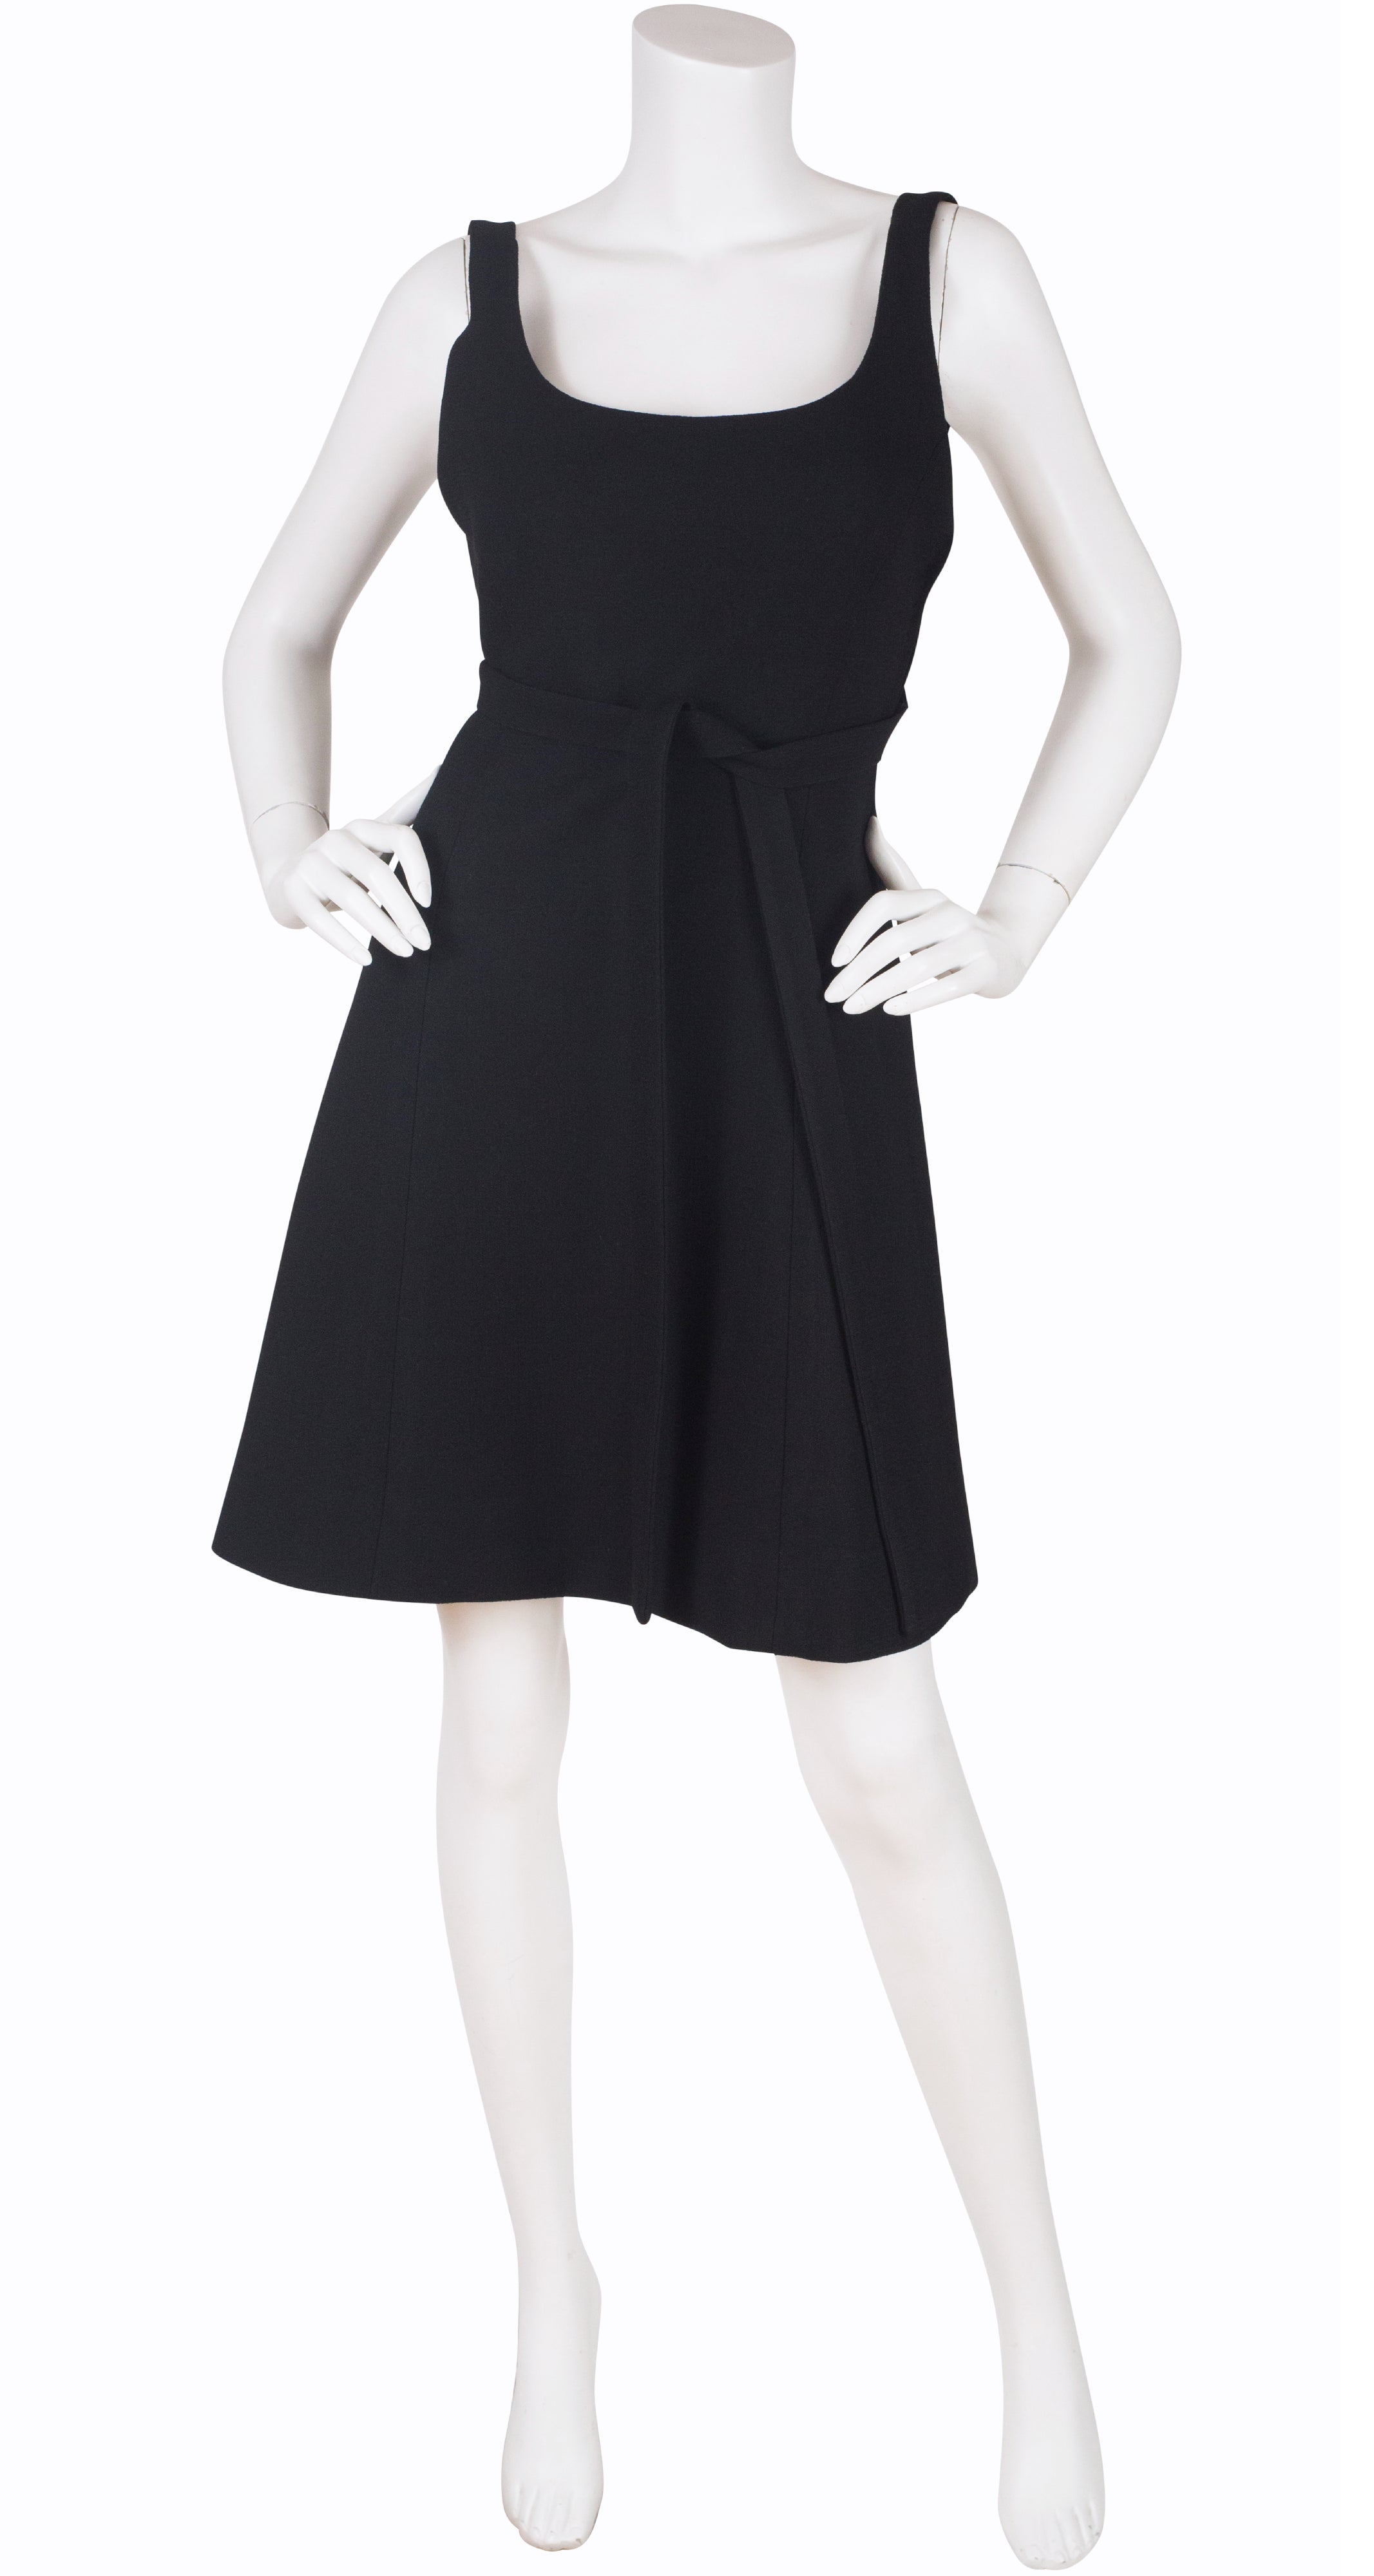 1960s Mod Black Wool Crepe Mini Dress